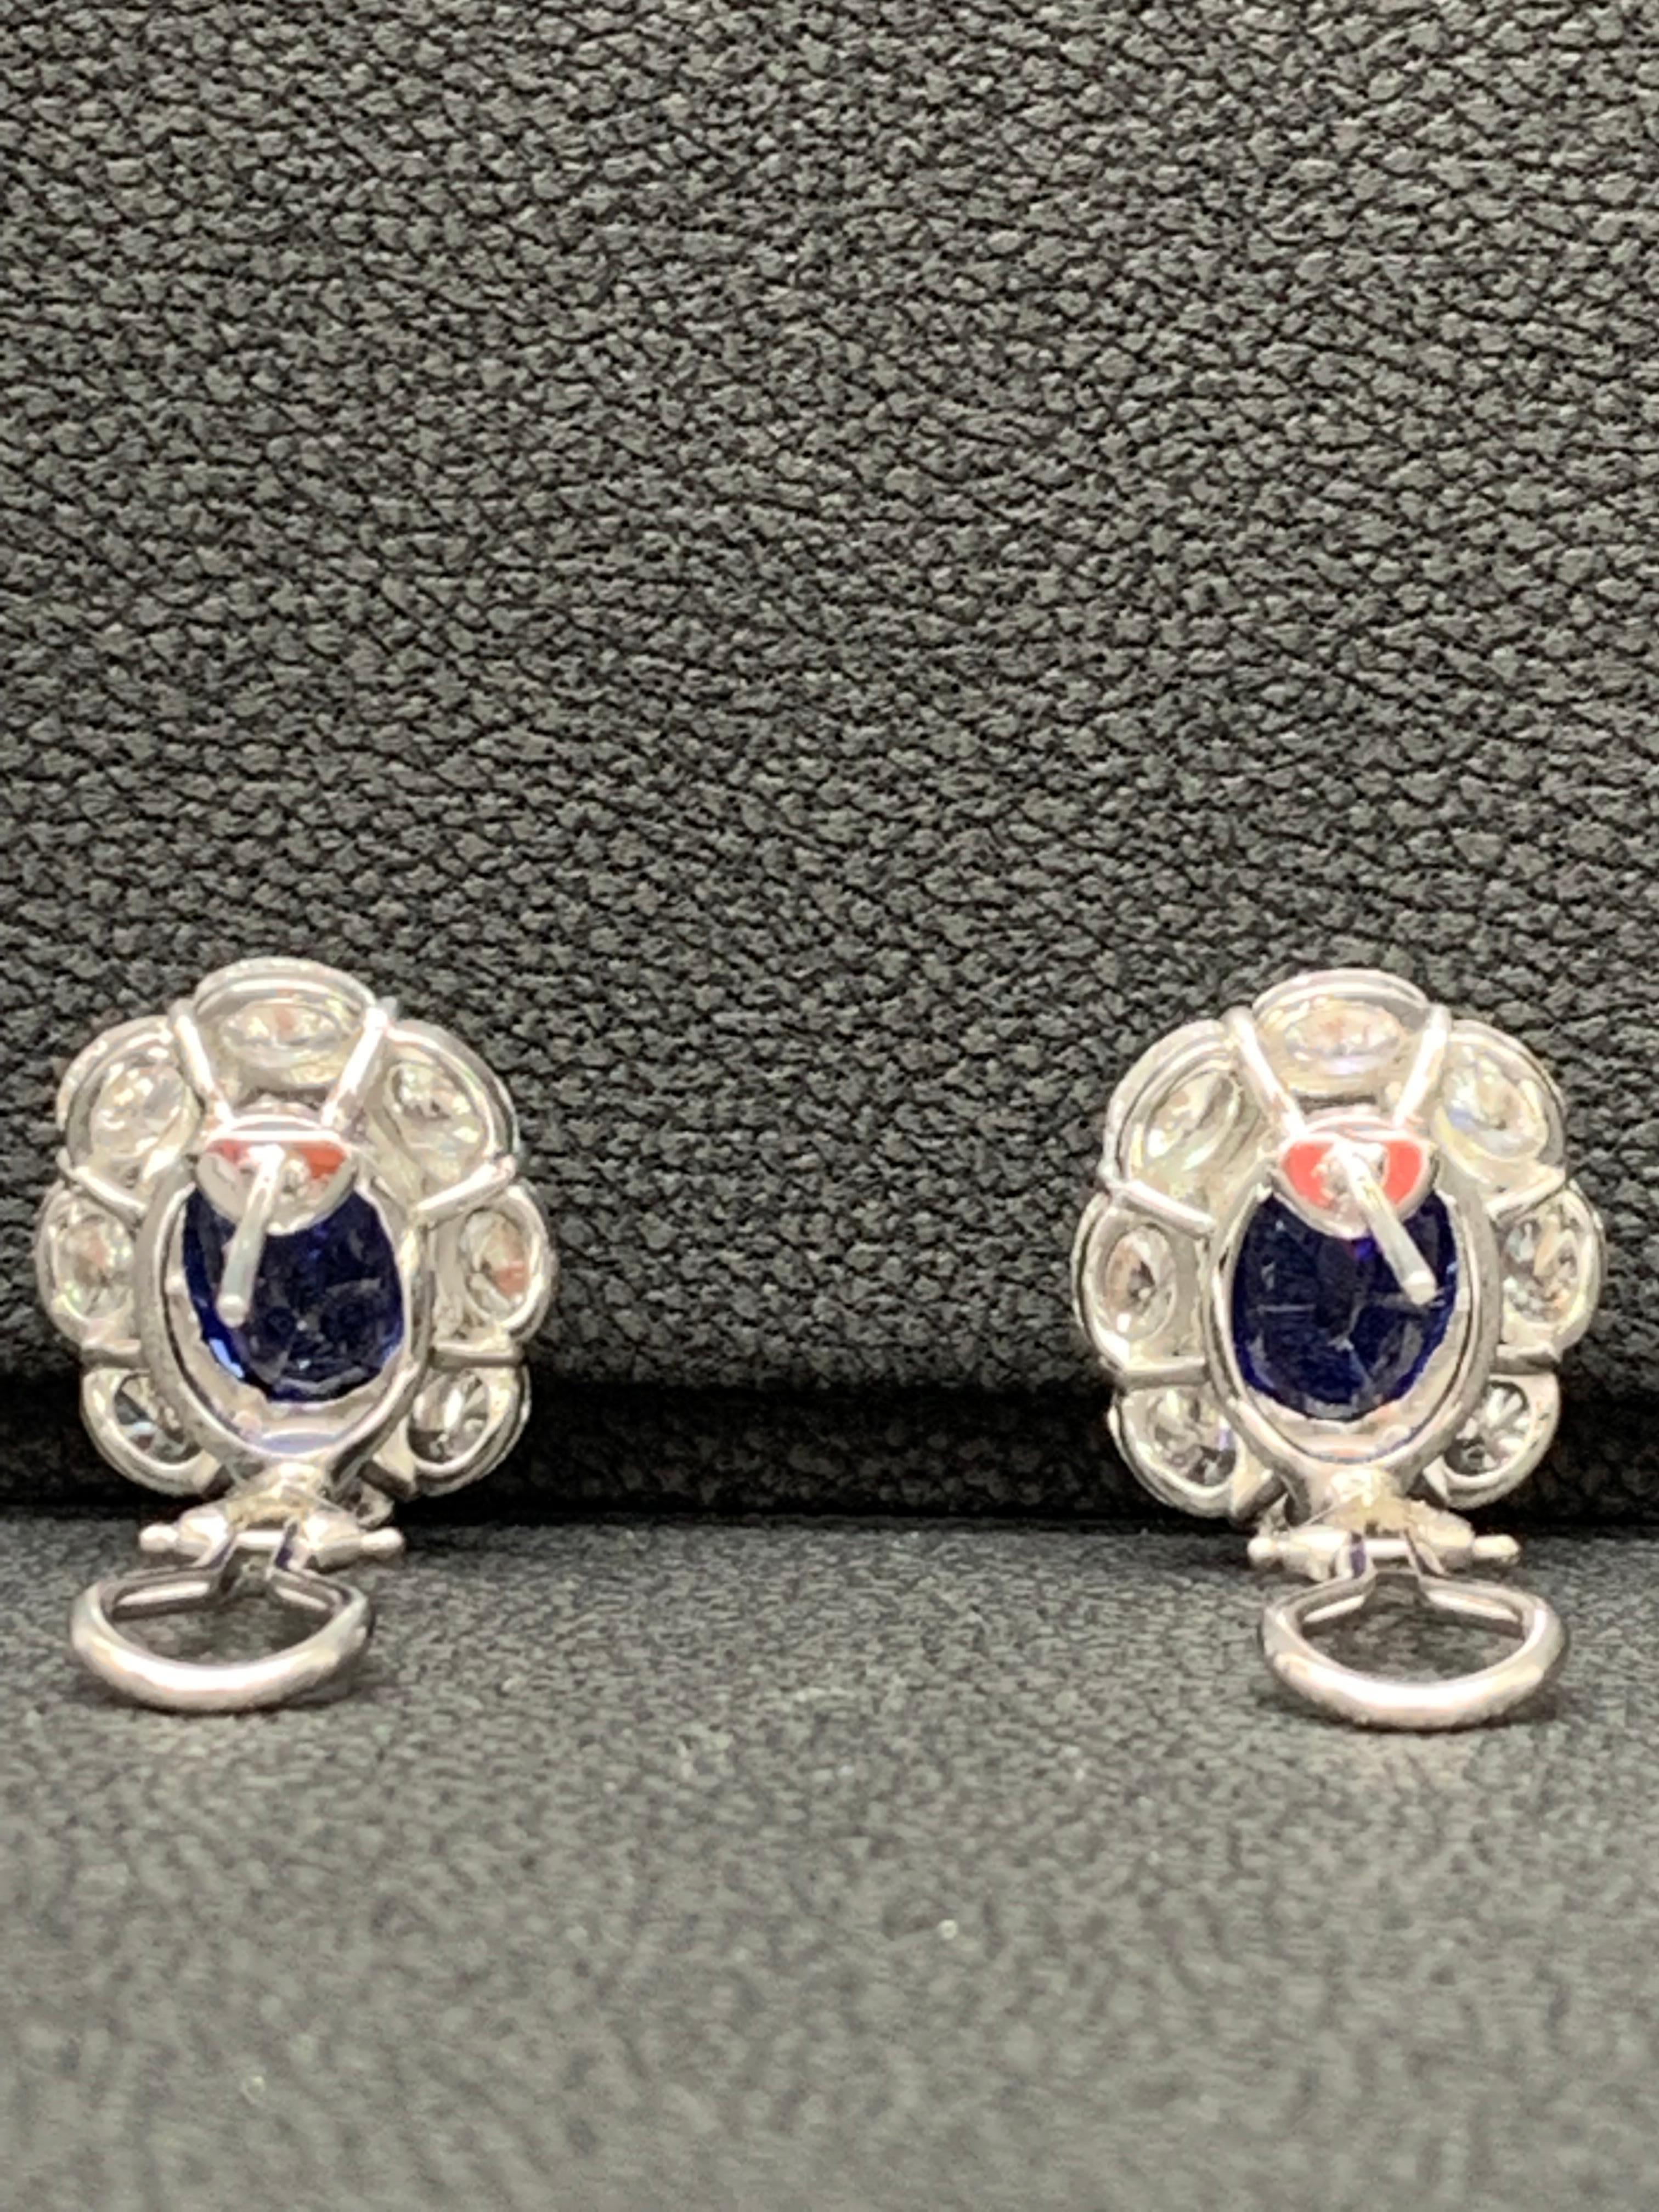 Certified 10.11 Carat Oval Cut Blue Sapphire and Diamond Halo Earrings in 18K For Sale 2